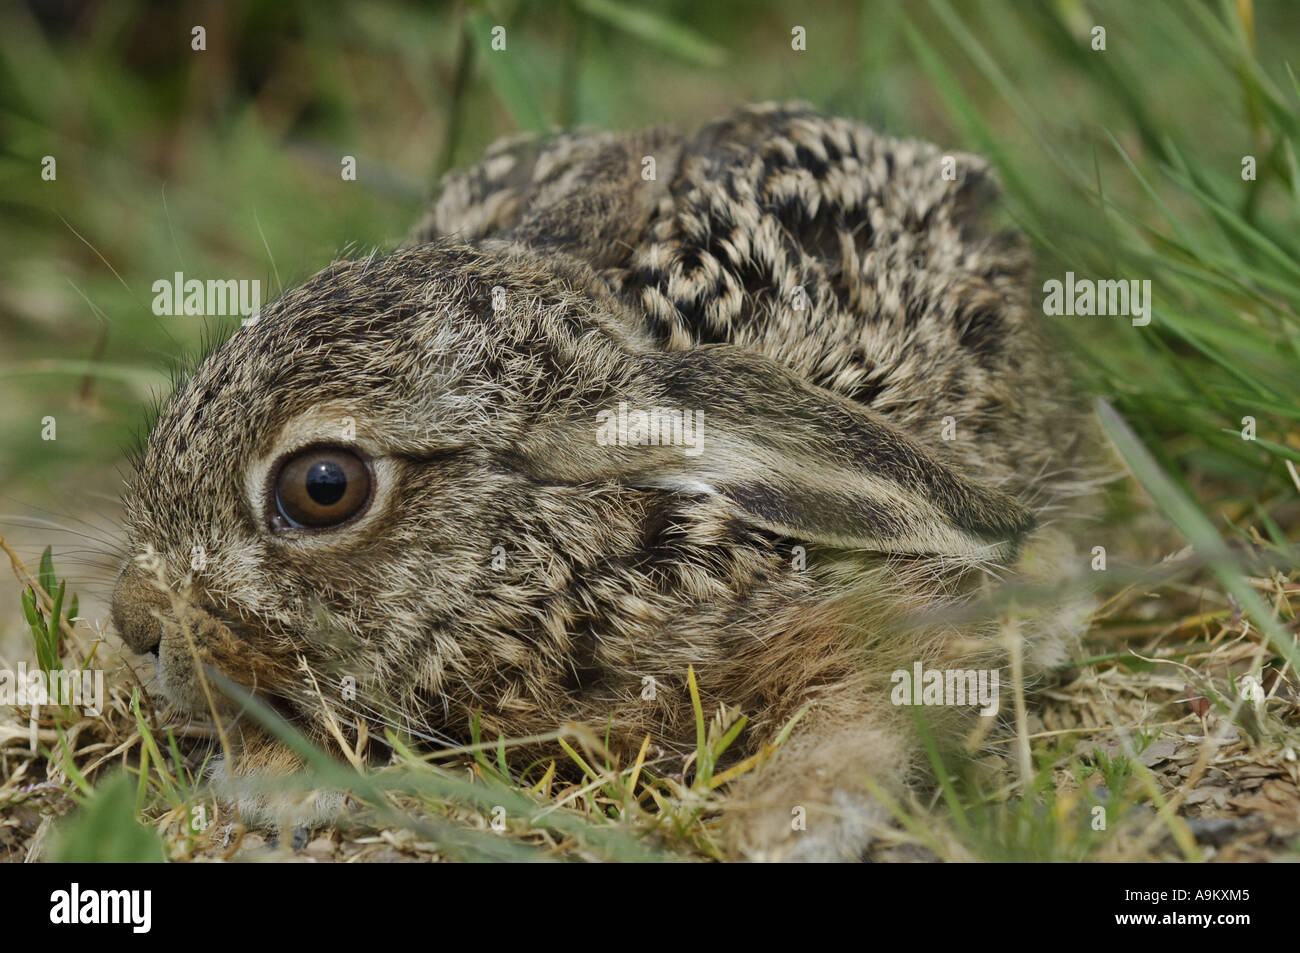 European hare (Lepus europaeus), juvenile, cowering at the ground Stock Photo